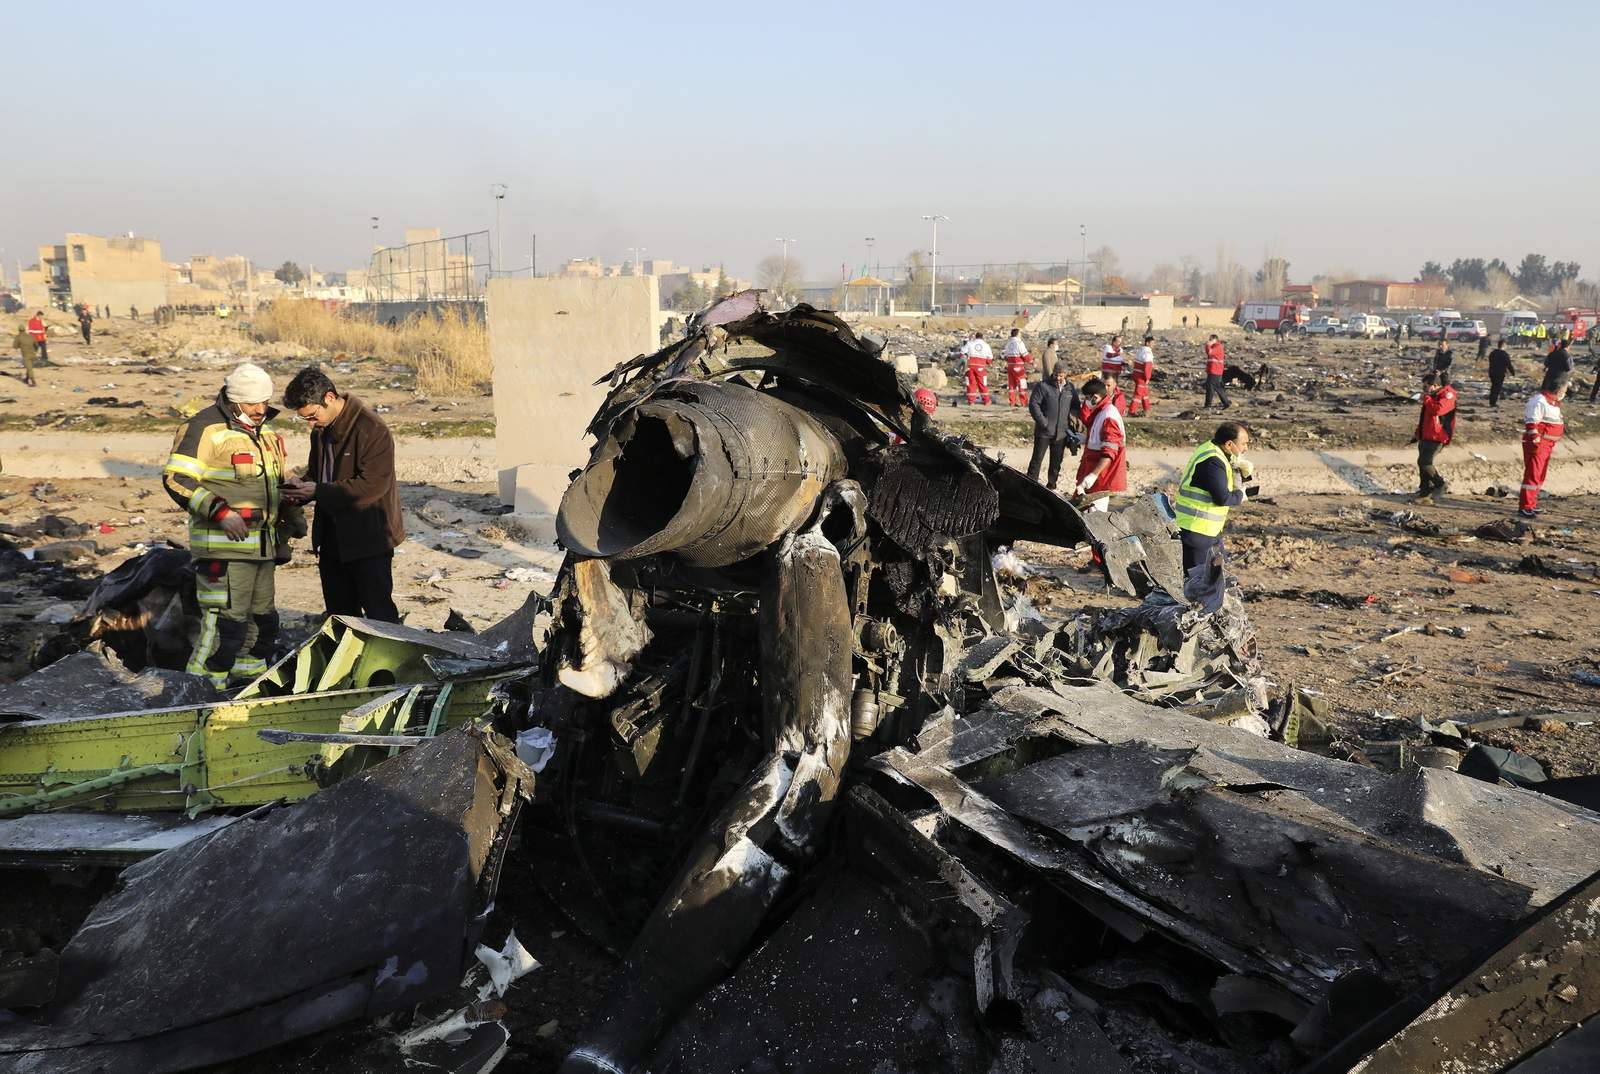 Iran allocates payment to families of Ukraine crash victims